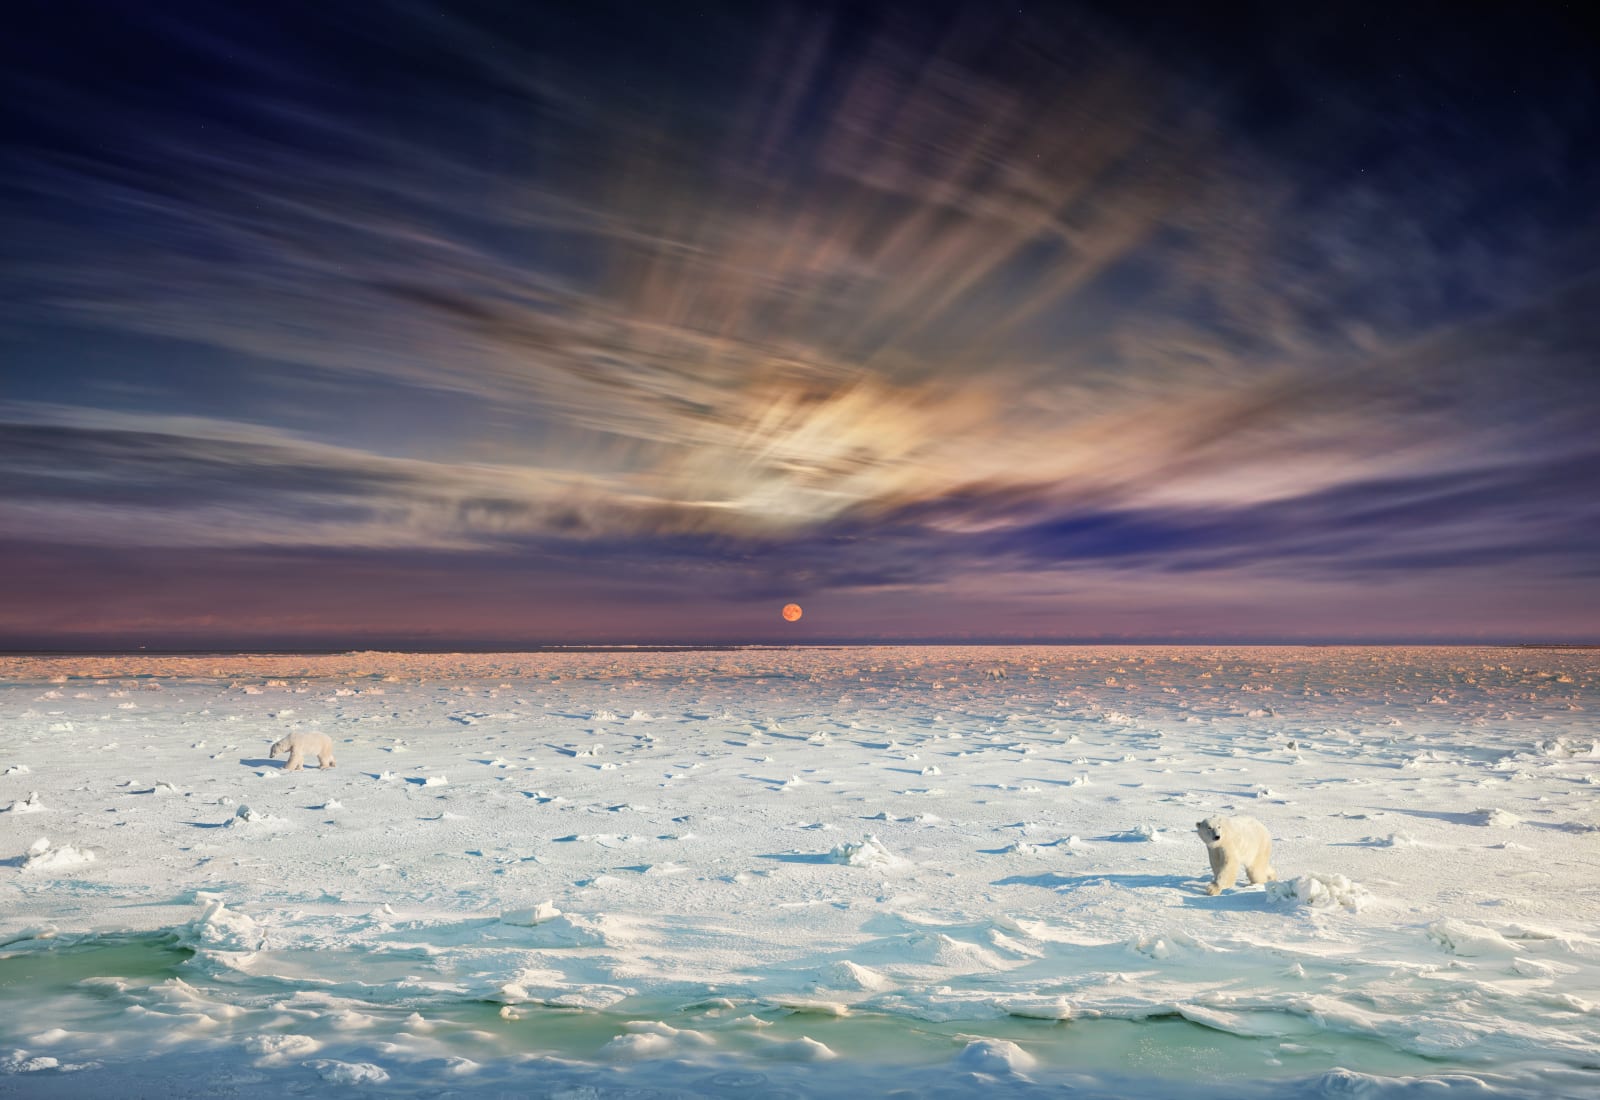 Stephen Wilkes, Polar Bears, Churchill, Manitoba, Canada, Day to Night™, 2019